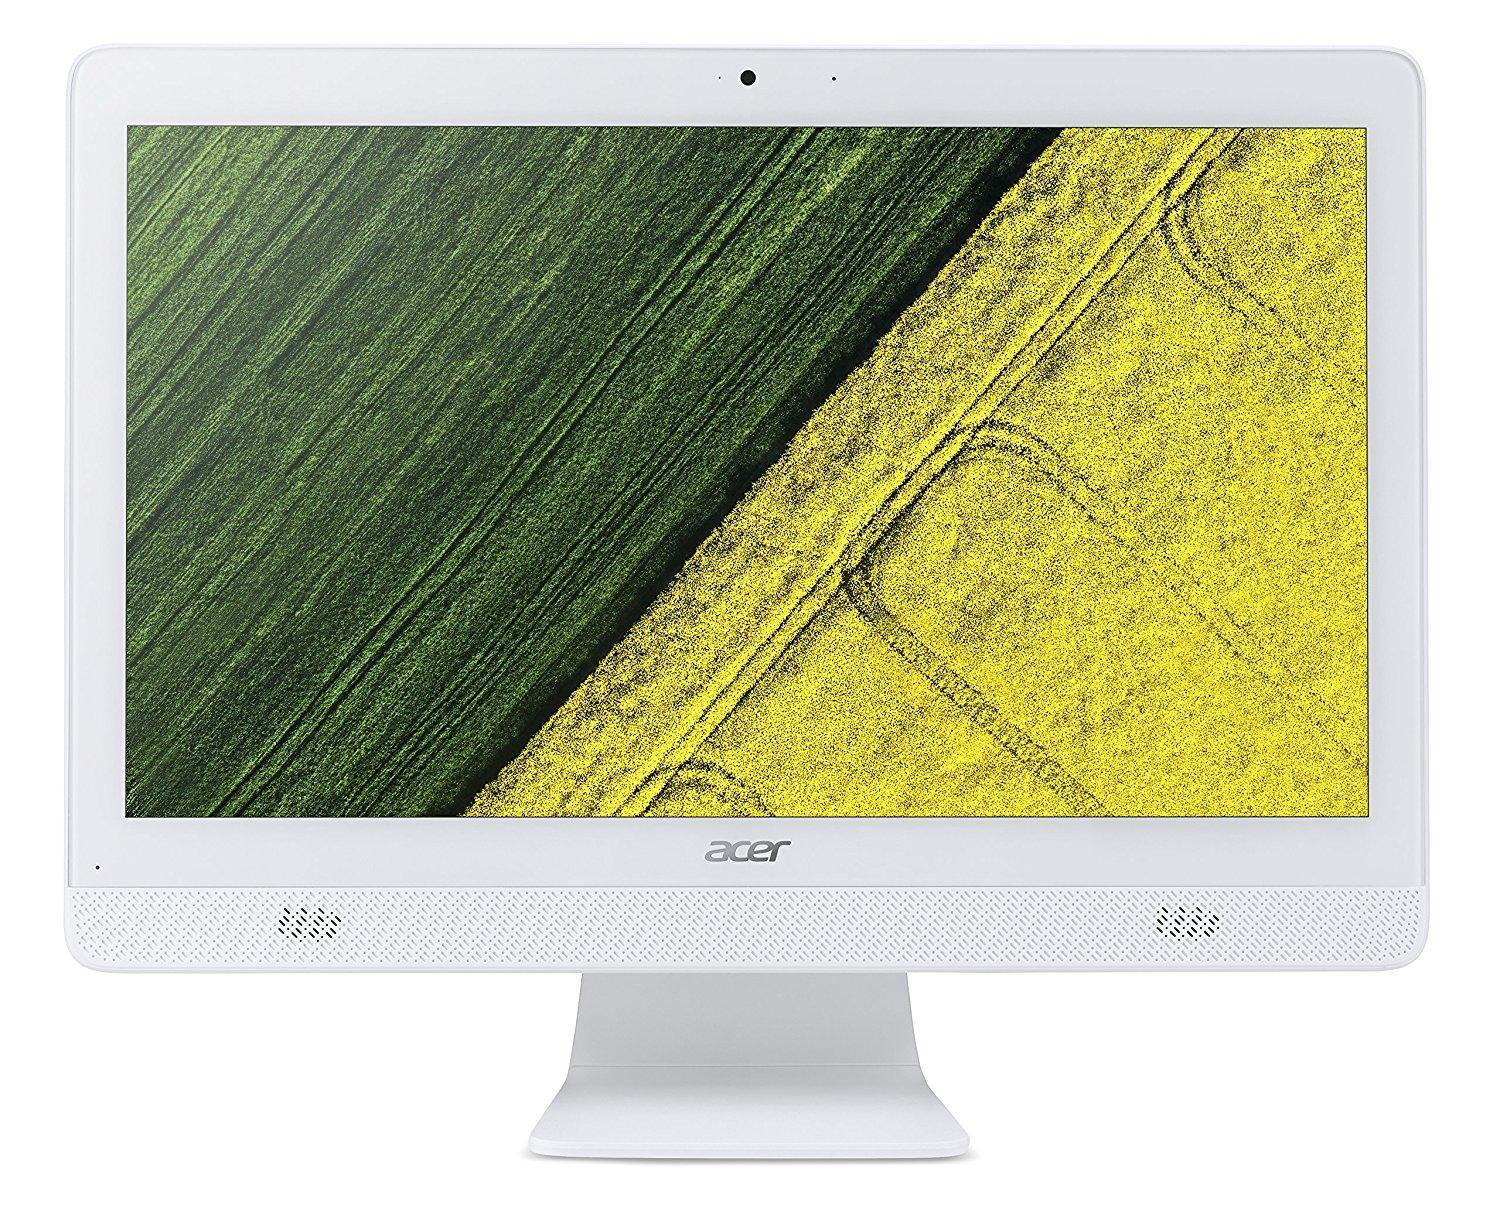 Моноблок Acer Aspire C20-720, Intel Pentium J3710, 1600 МГц, 4096 Мб, 1000 Гб, Intel HD Graphics 405, DVD-RW, Wi-Fi, Bluetooth, DOS, 19.5" (1600x900)